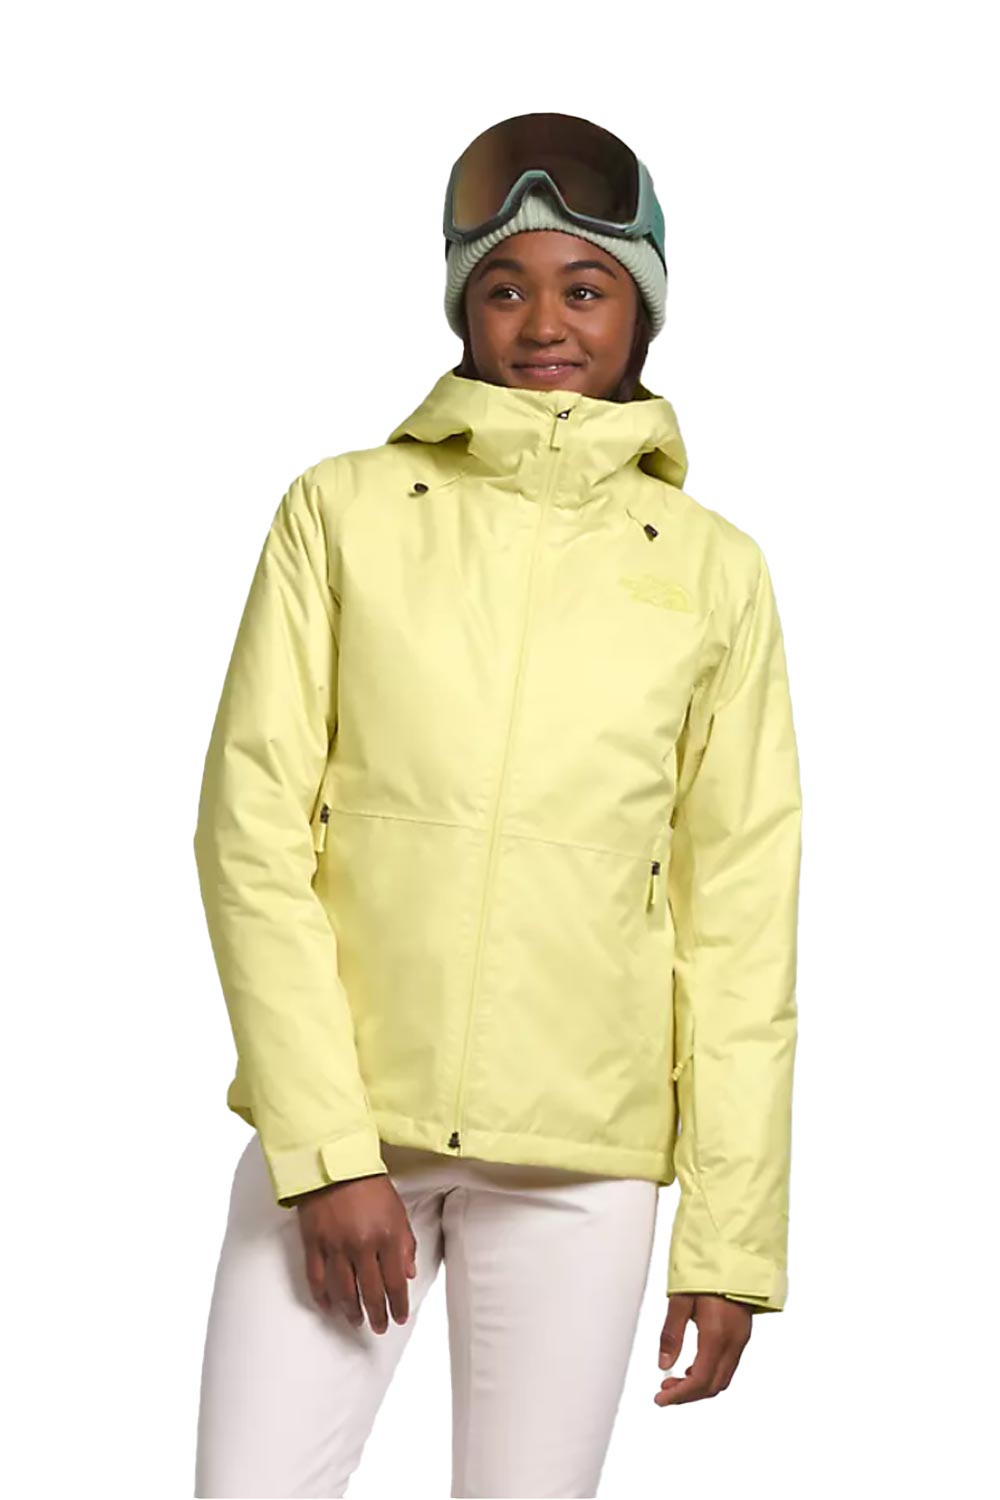 North Face ski jacket, women's, bright yellow